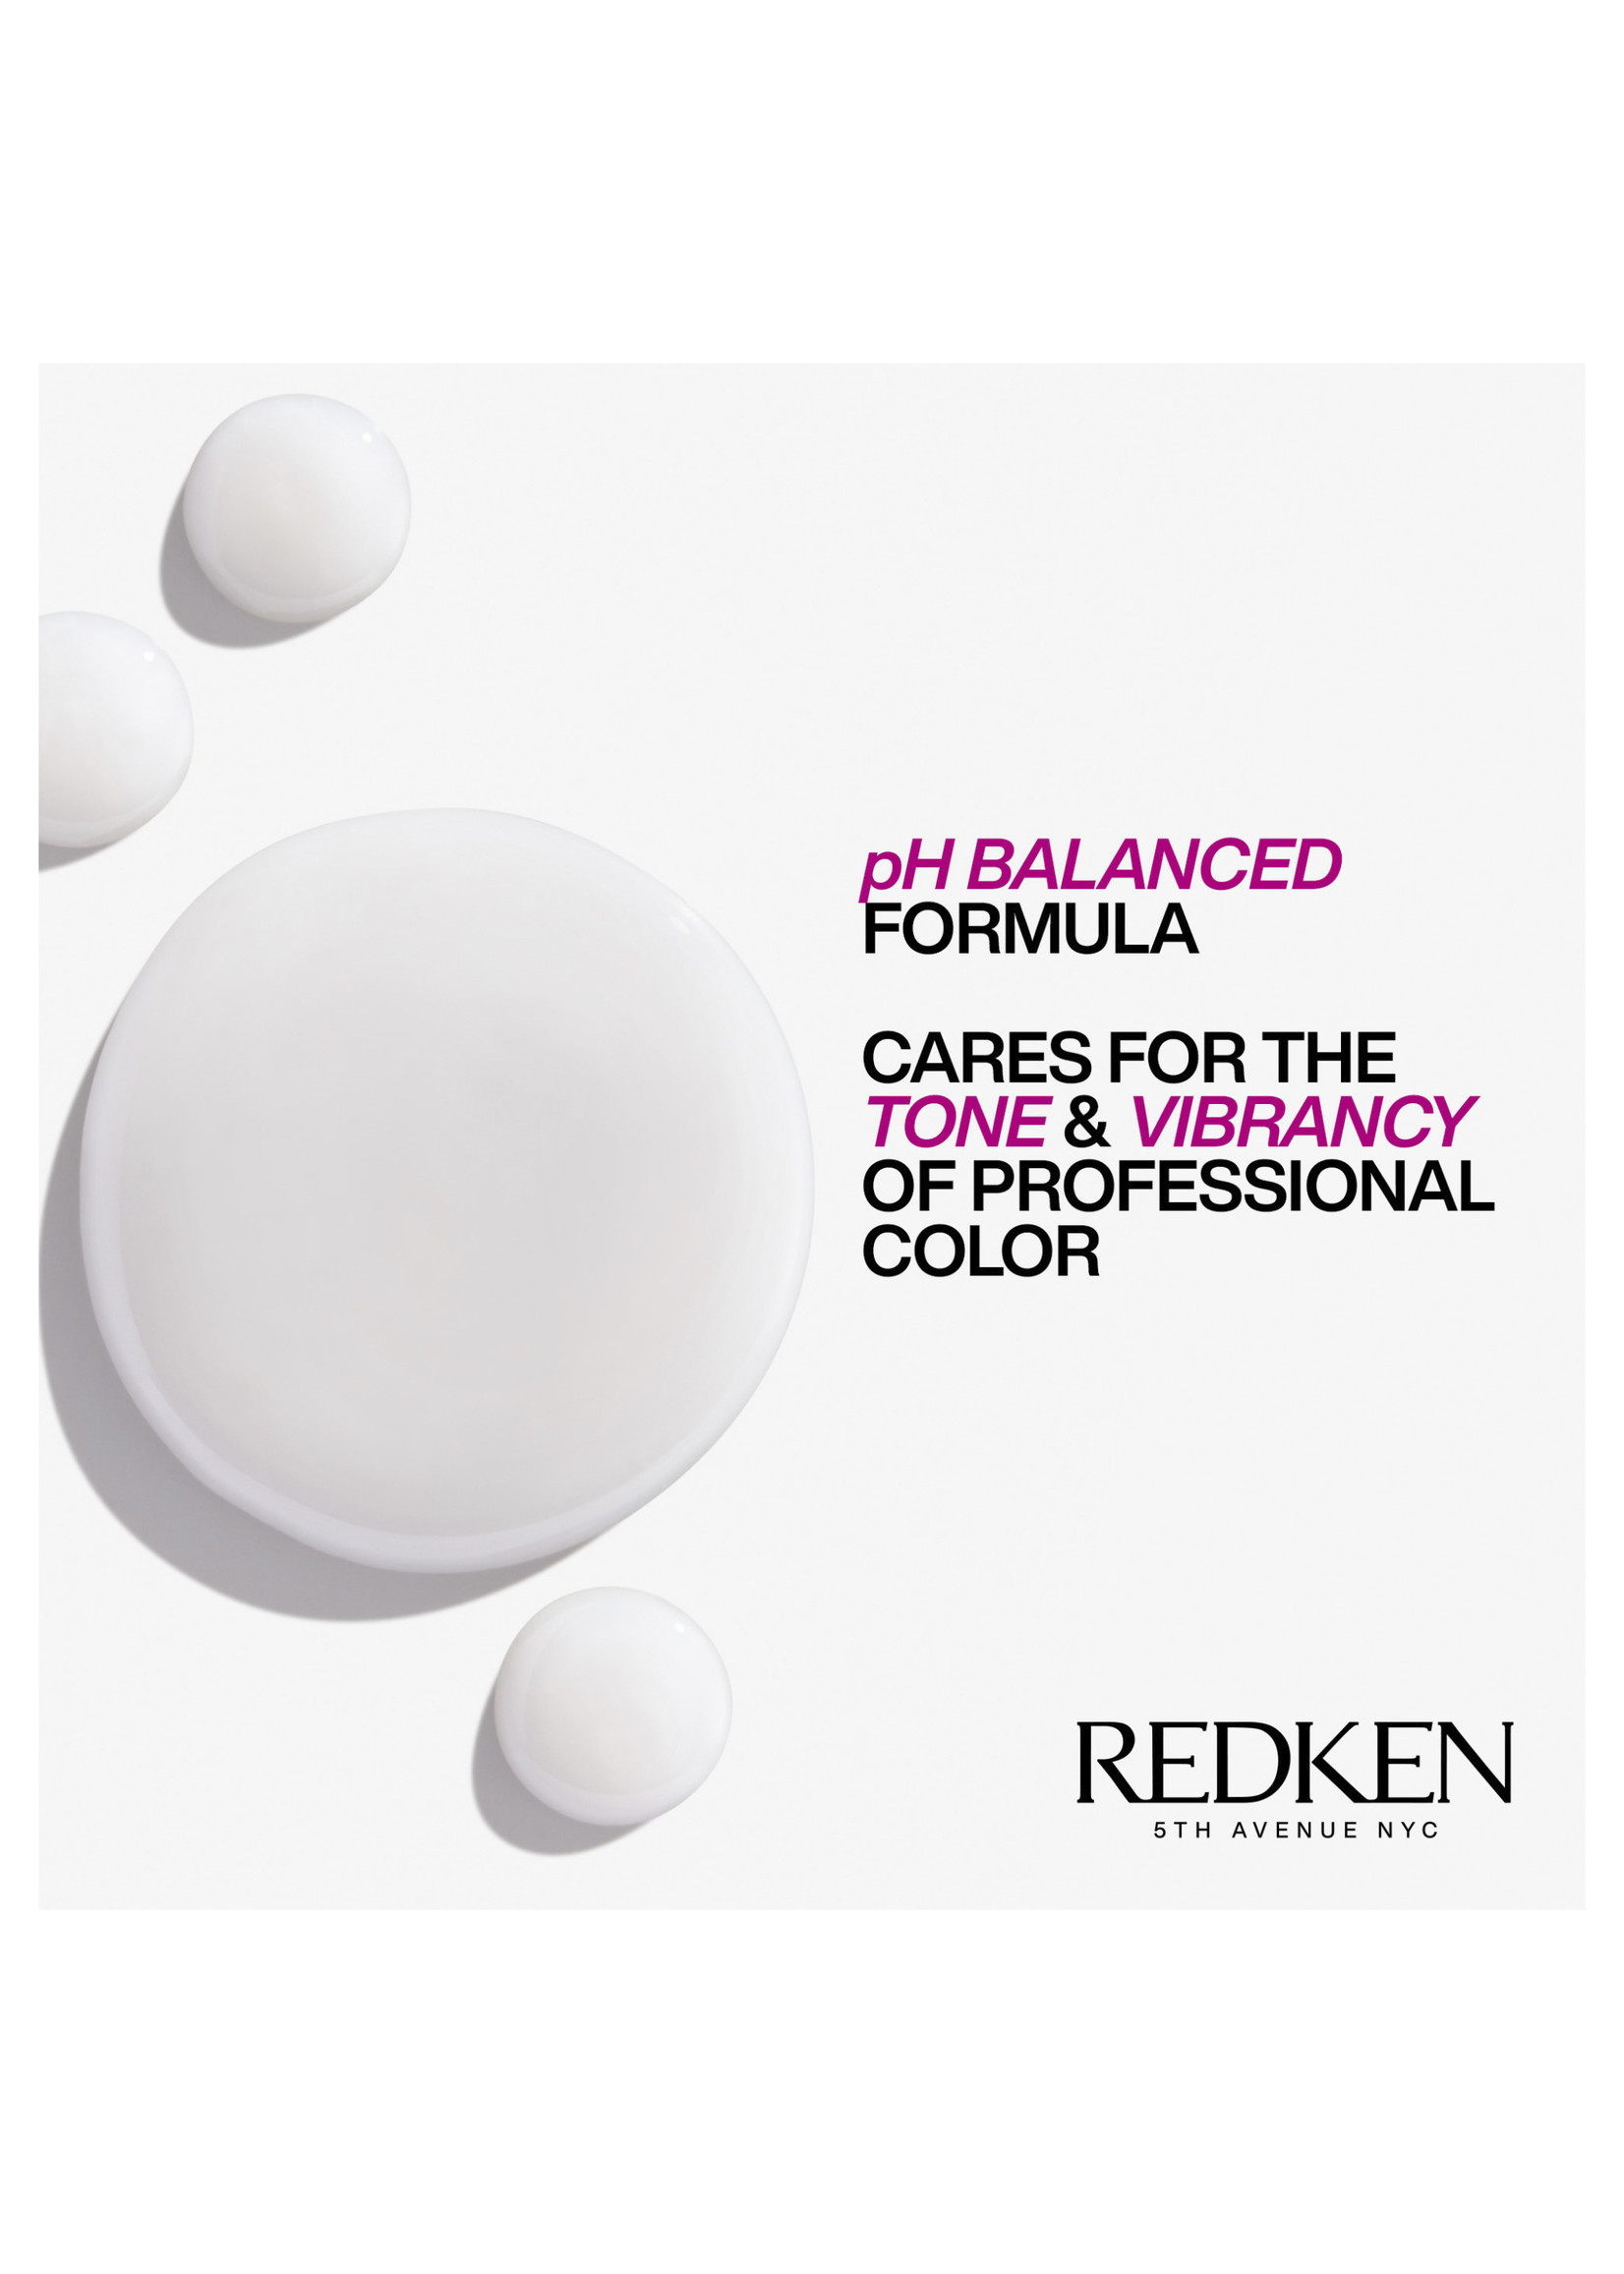 Redken Redken Color Extend Magnetics Shampoo 300ml